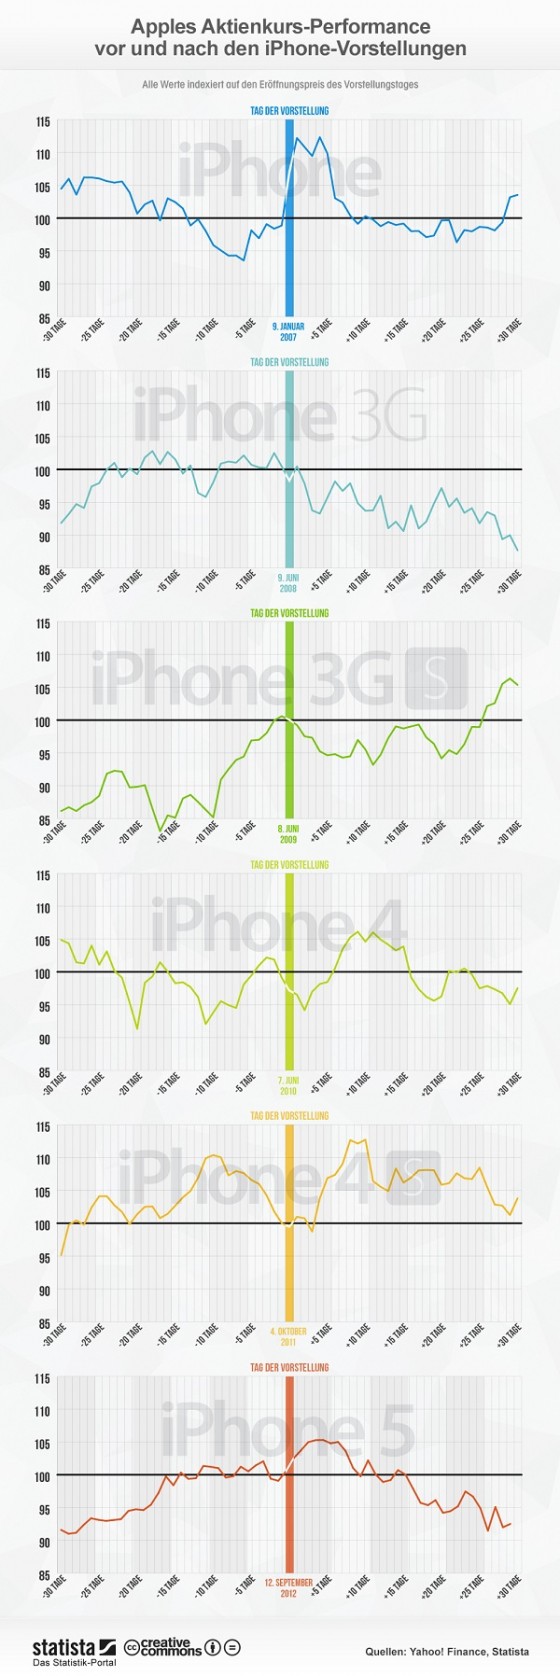 iPhone 5S & iPhone 5C: Enttäuschung bei Anlegern macht sich breit